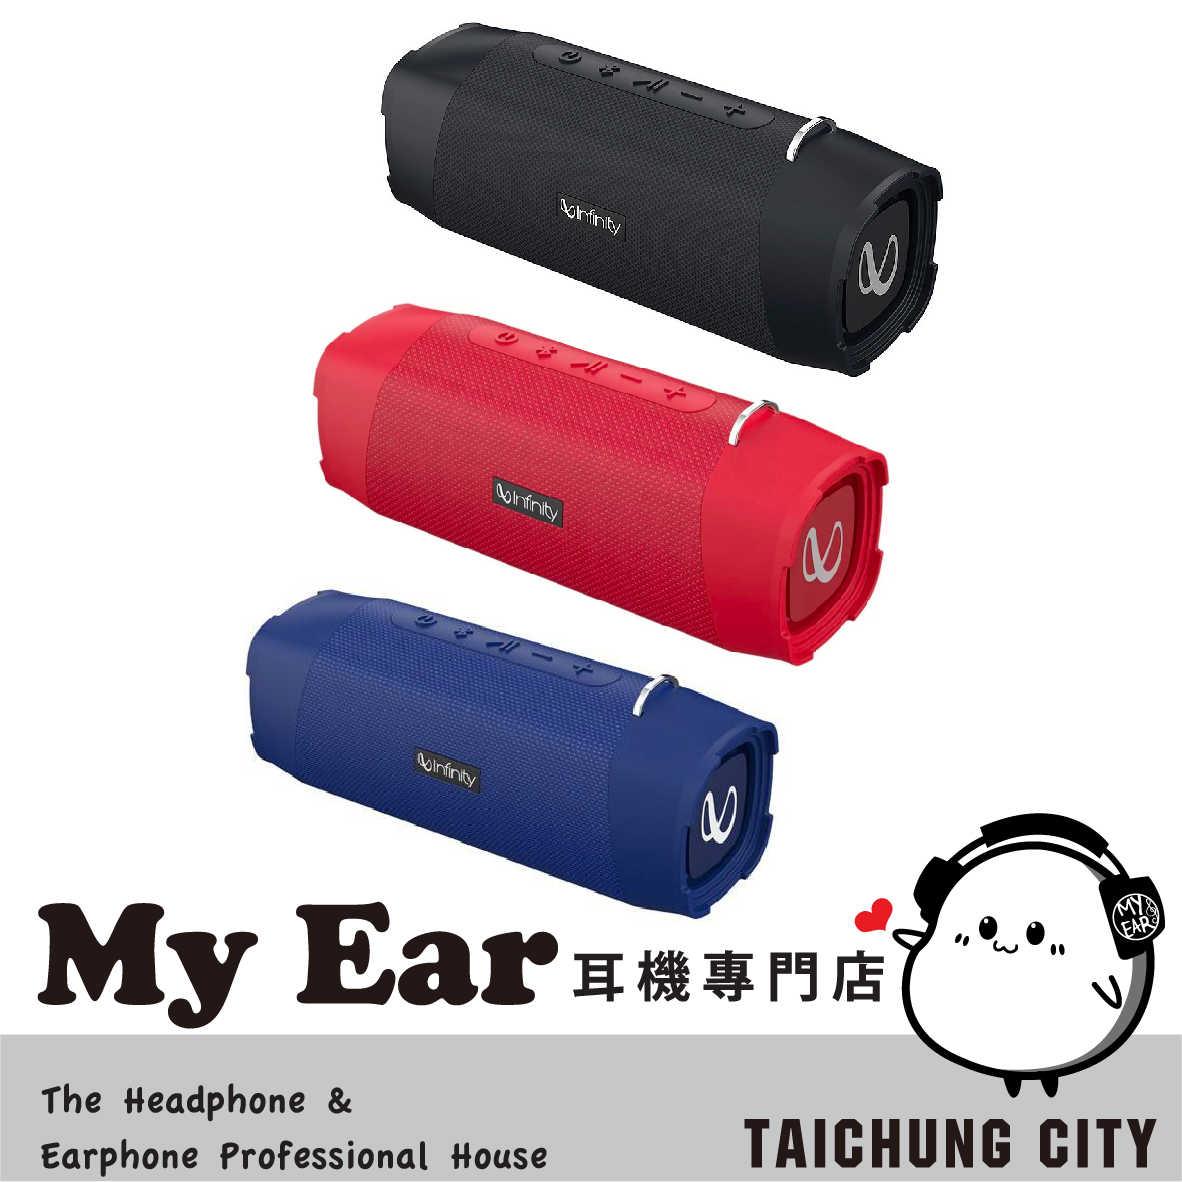 Infinity CLUBZ 750 藍 語音助理 內建行動電源 可攜式 防水 藍牙喇叭 | My Ear 耳機專門店